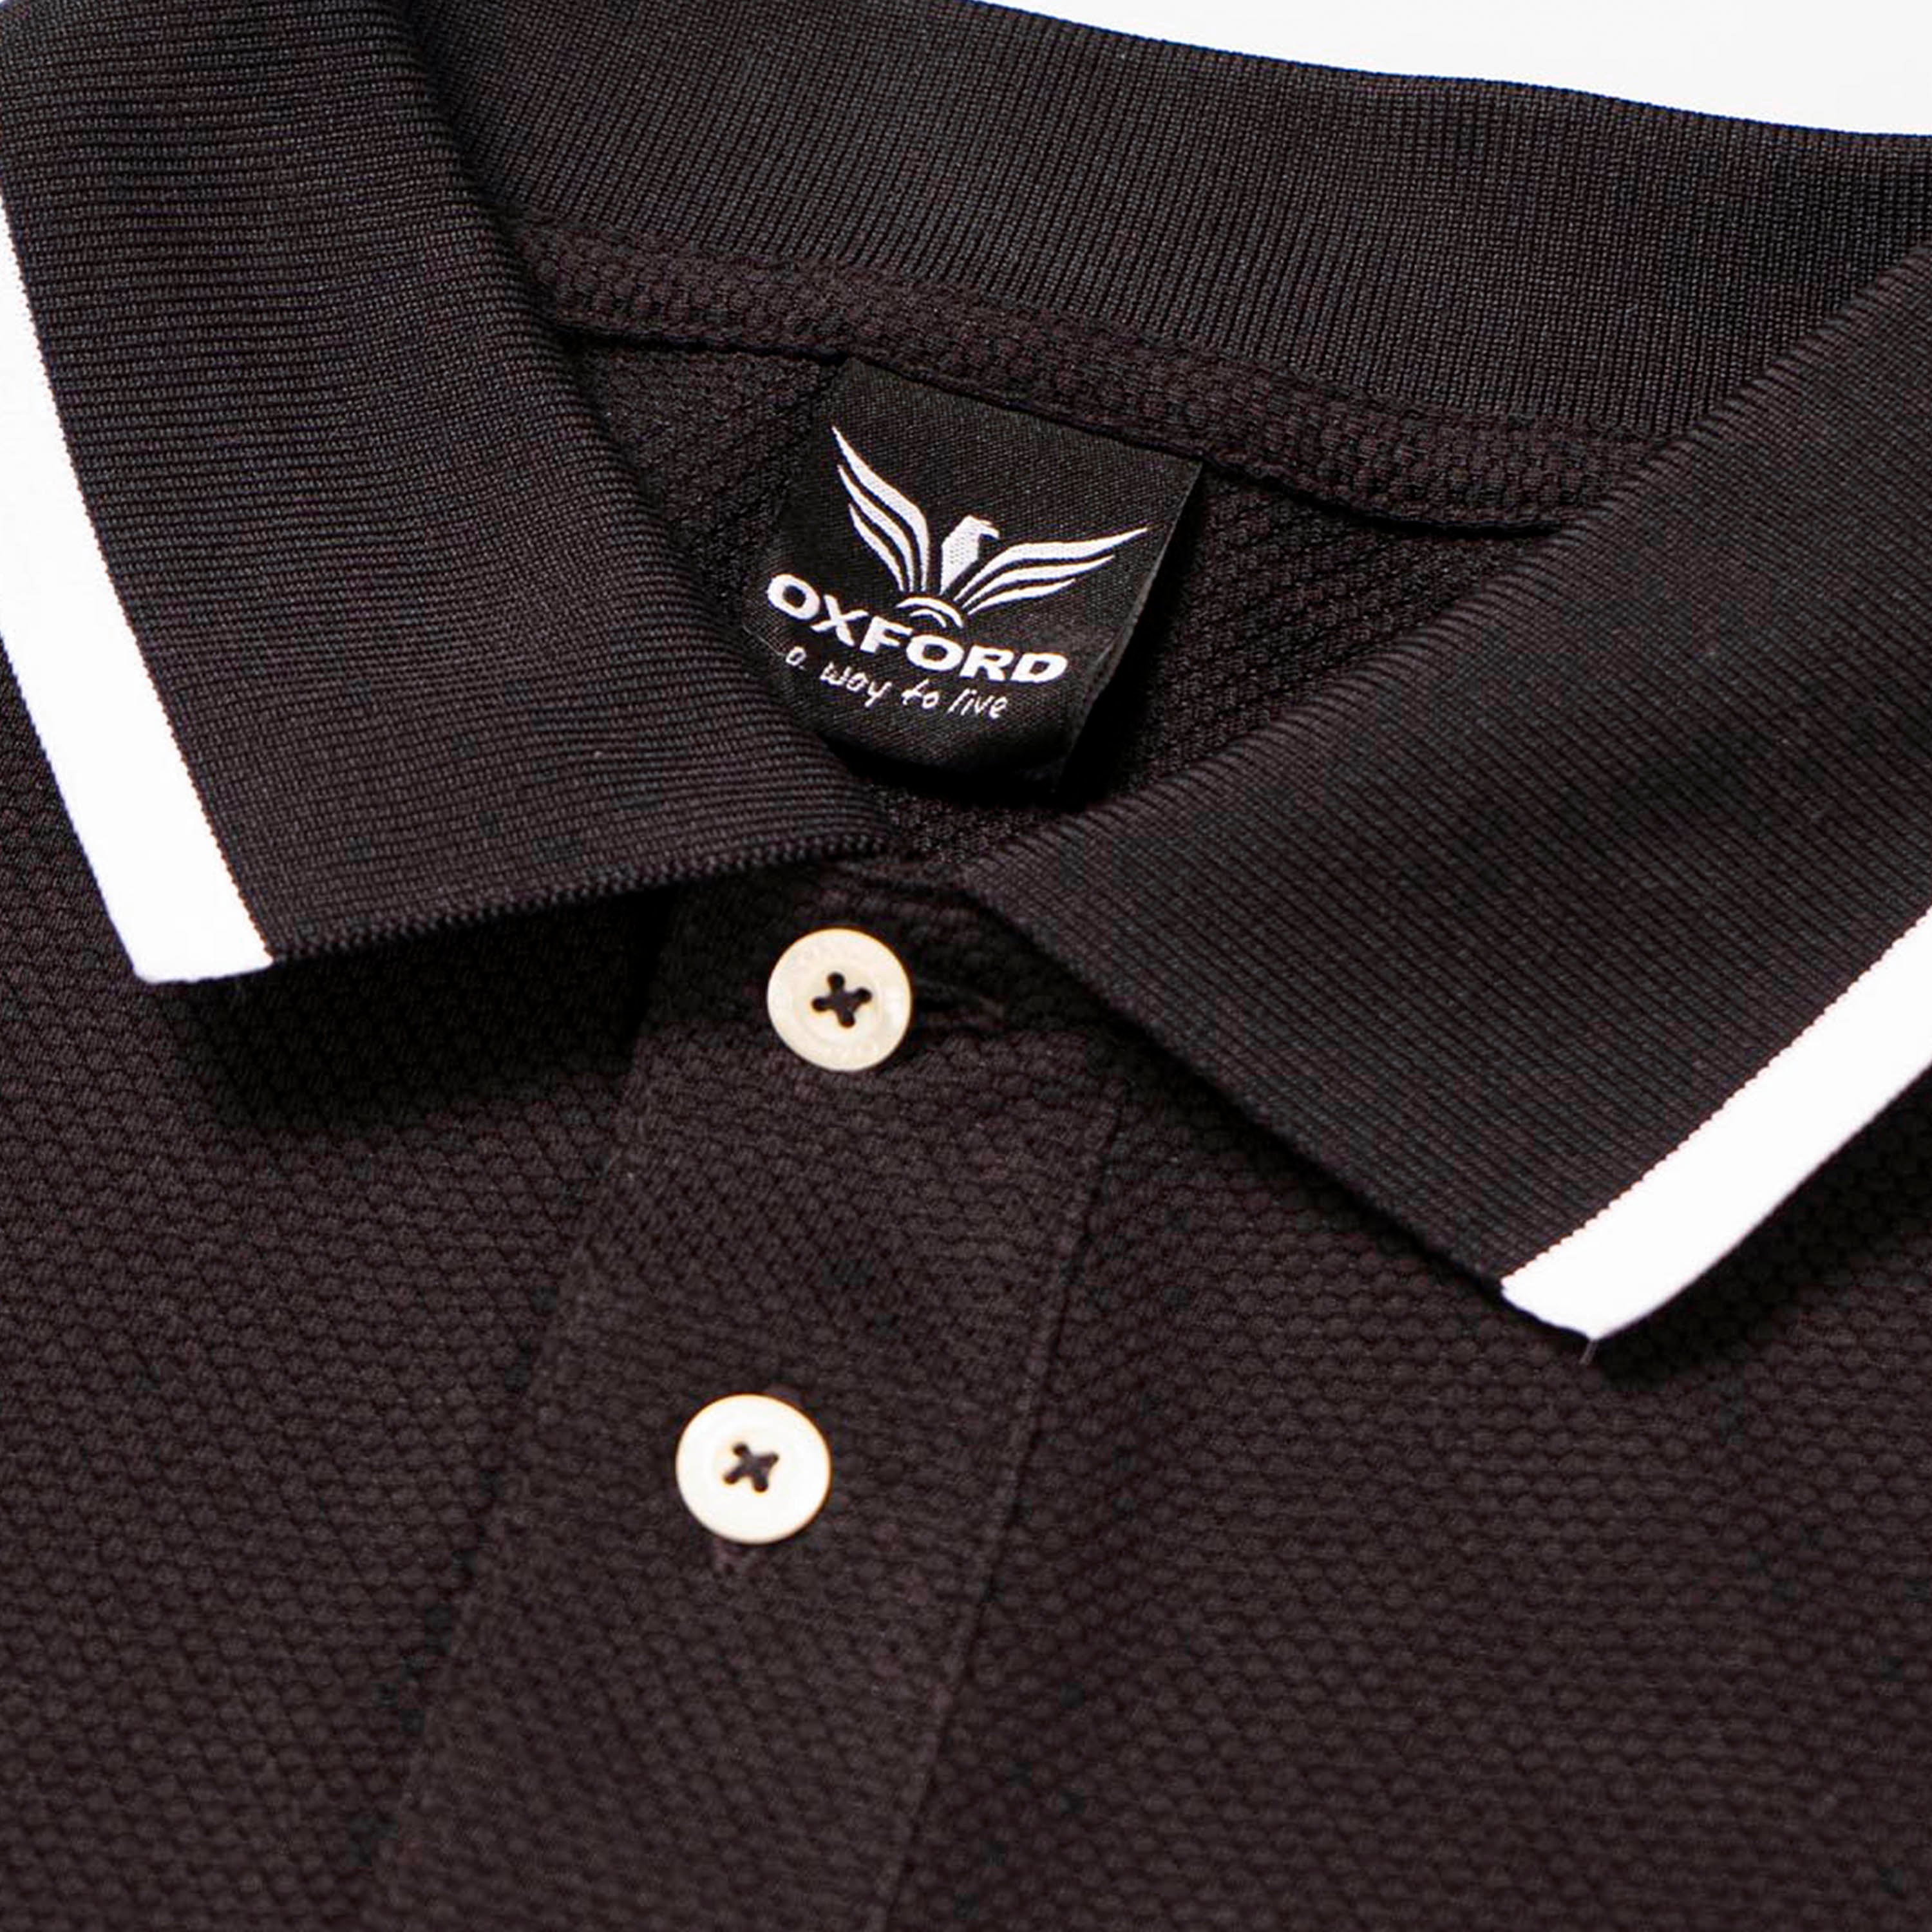 Classic Black Oxford Premium Polo shirt